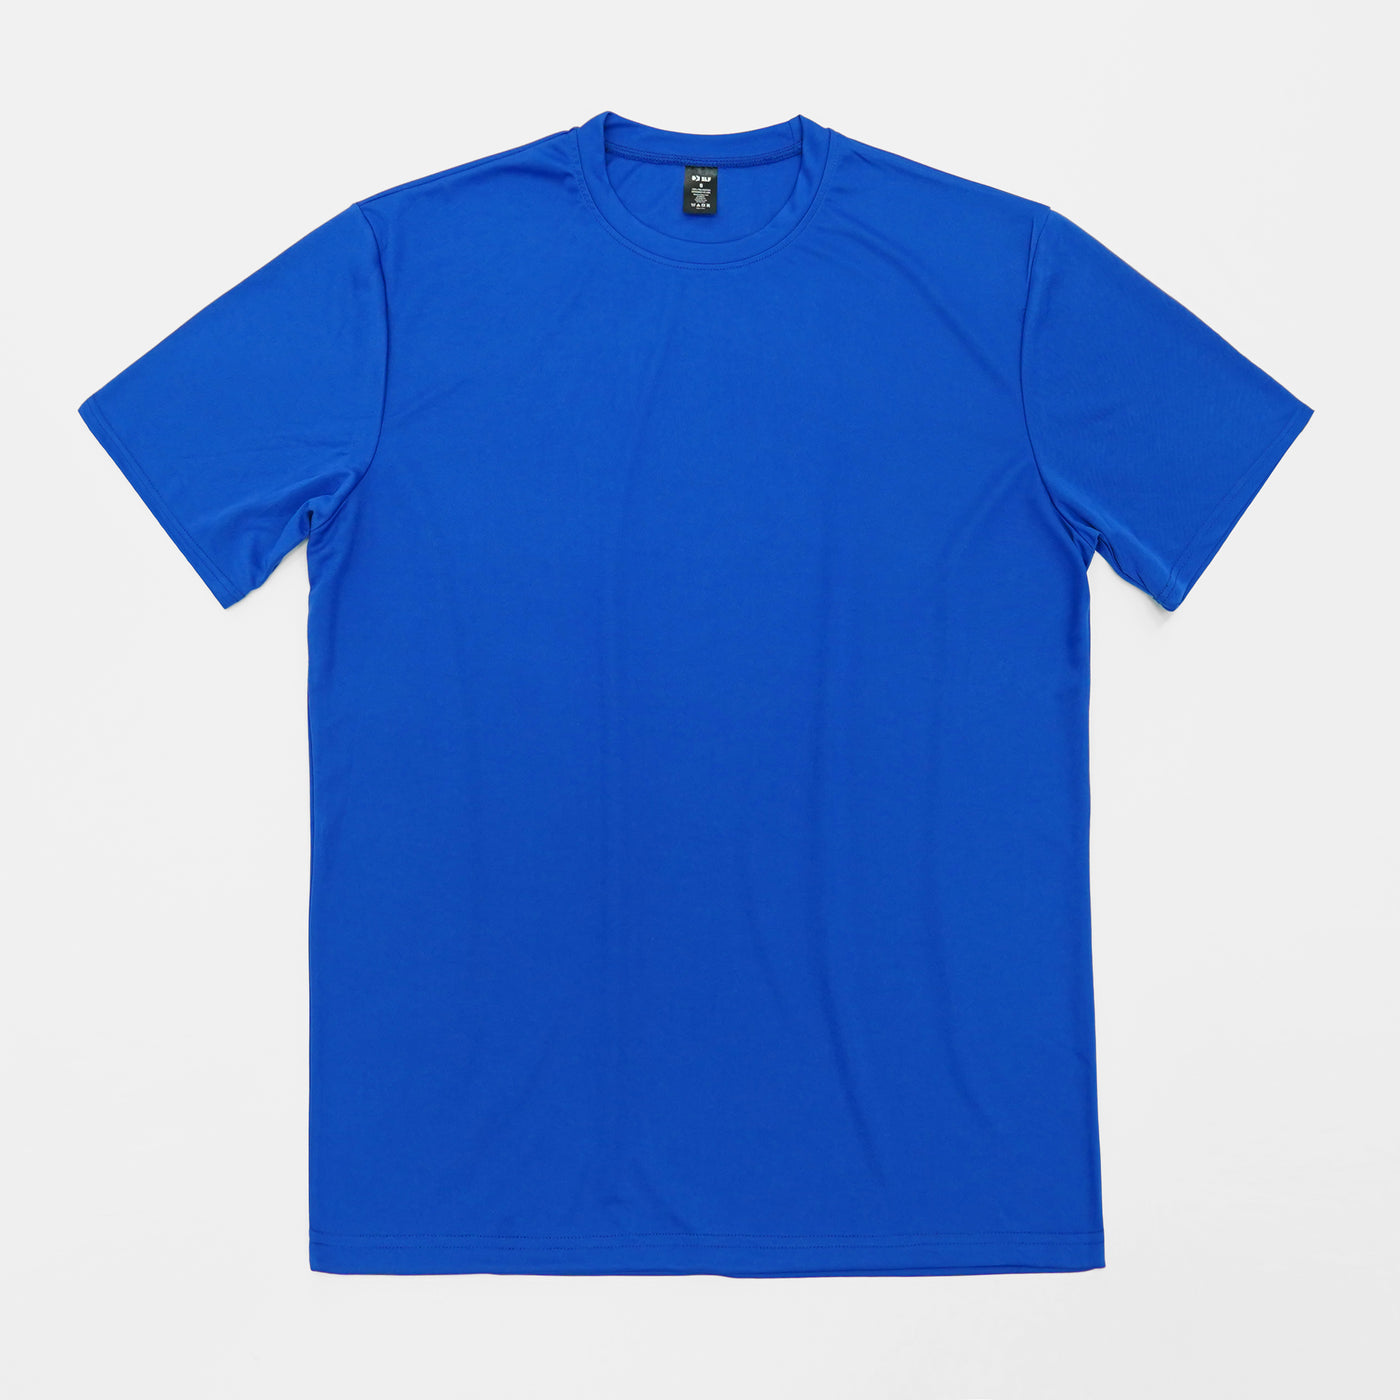 Hue Royal Blue Quick Dry Shirt